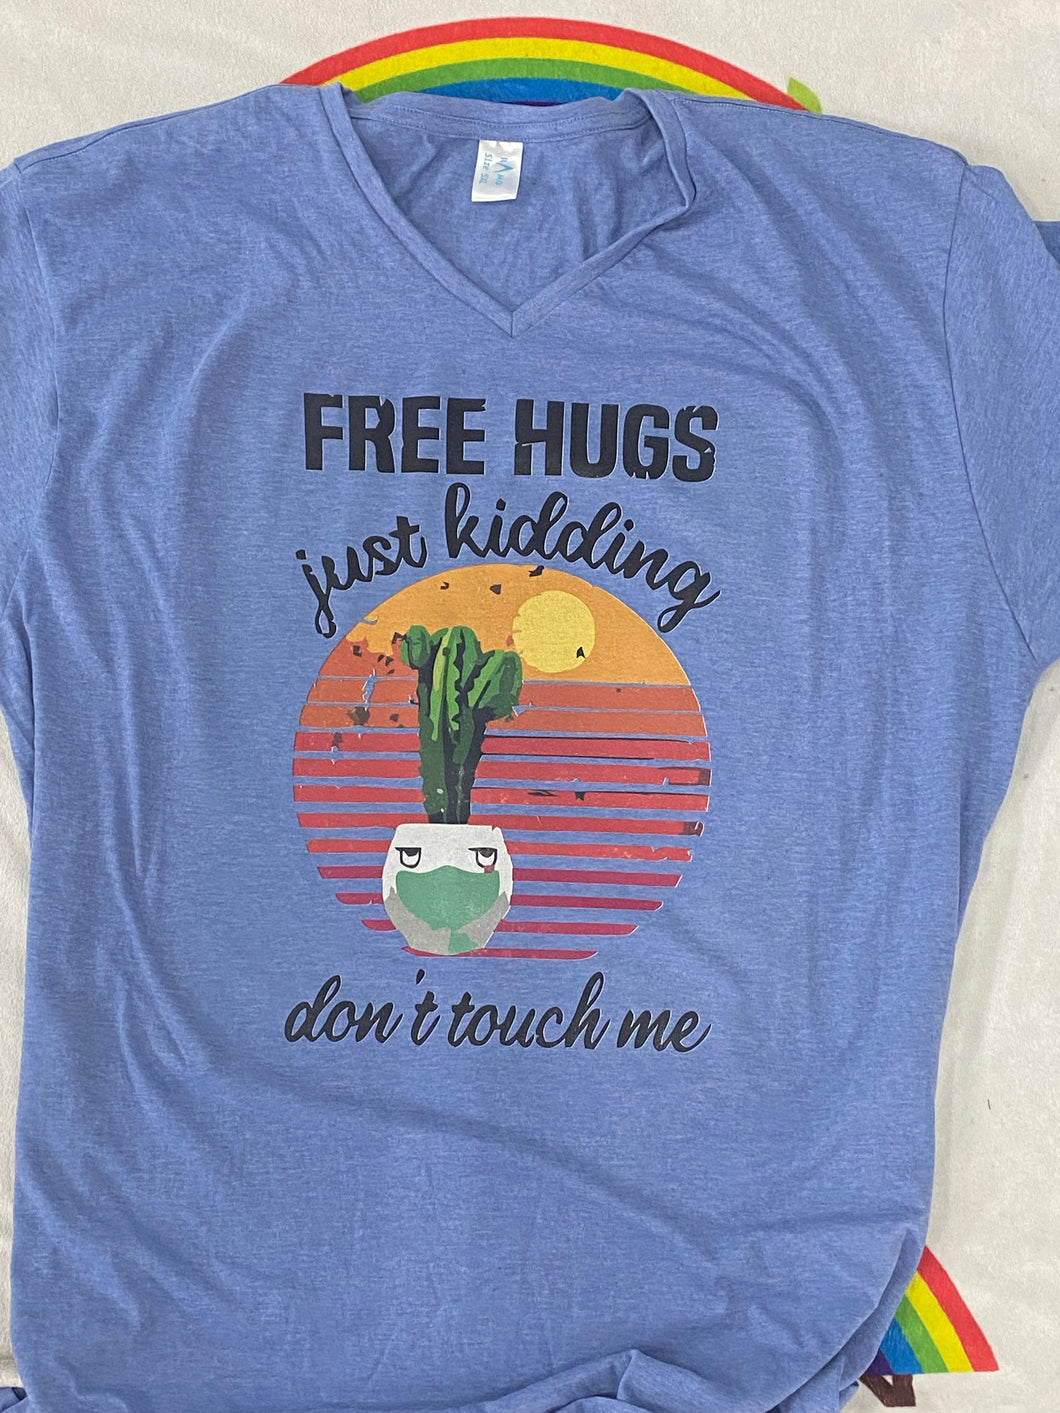 Free hugs just kidding t-shirt